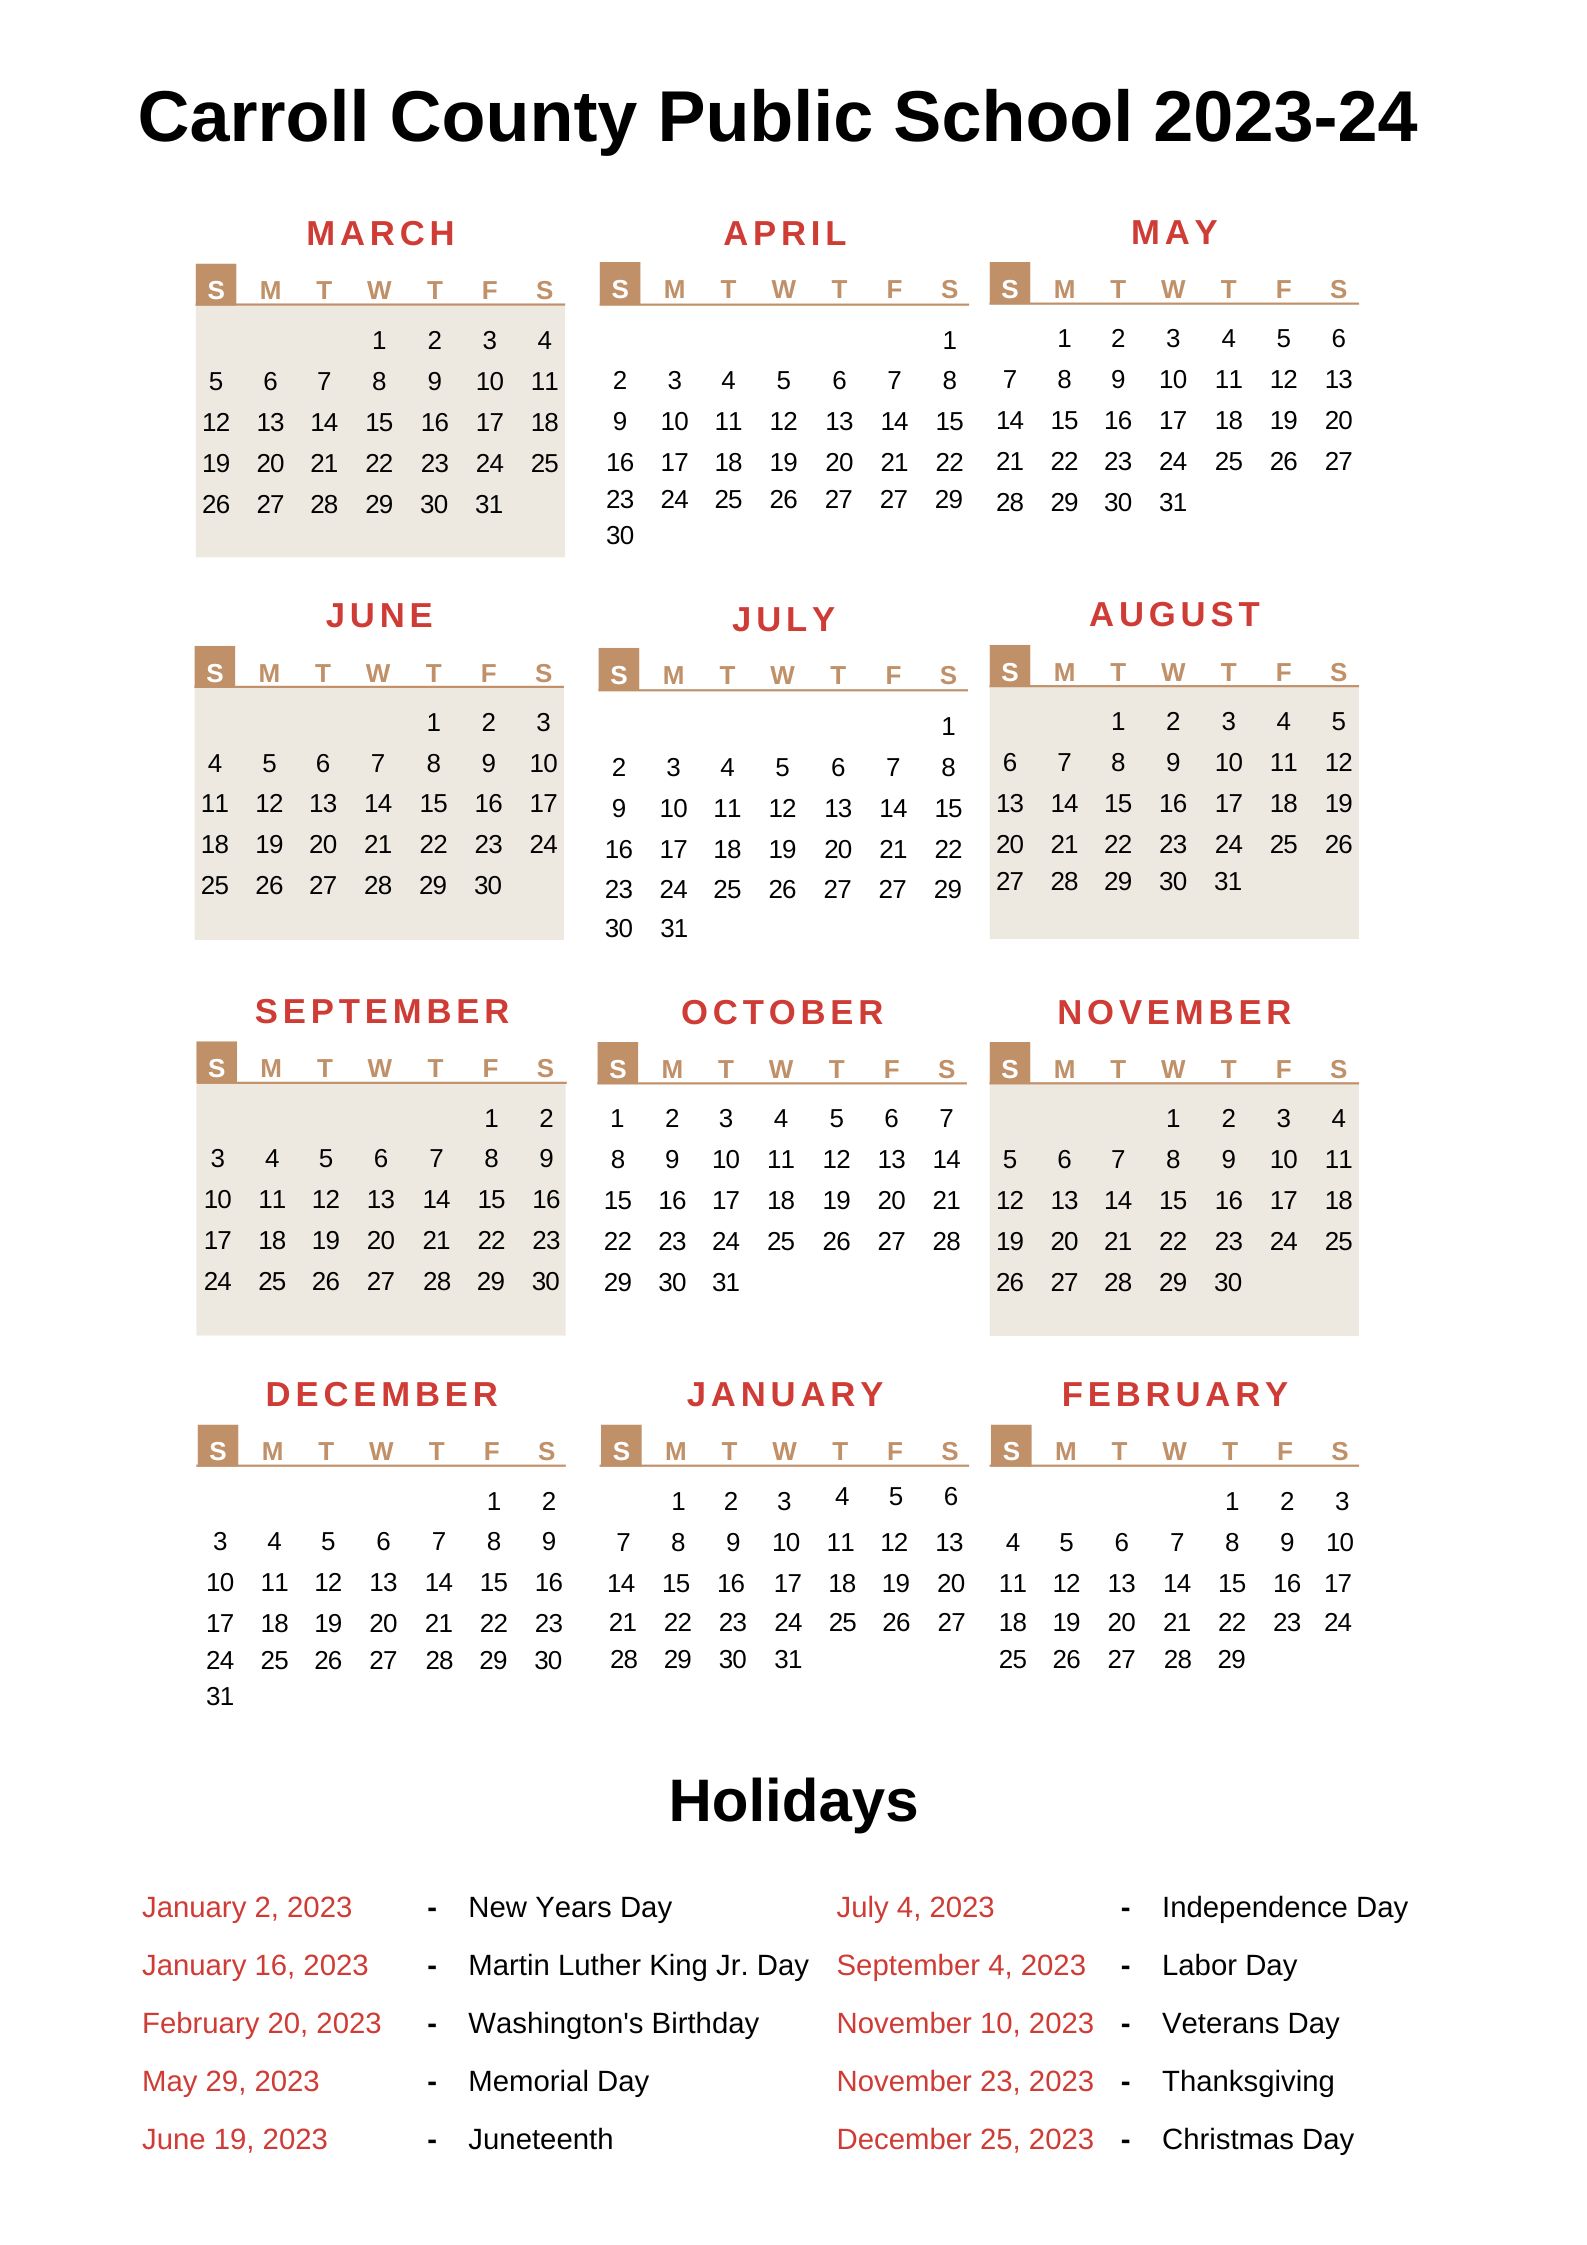 Carroll County Public Schools Calendar 202324 With Holidays